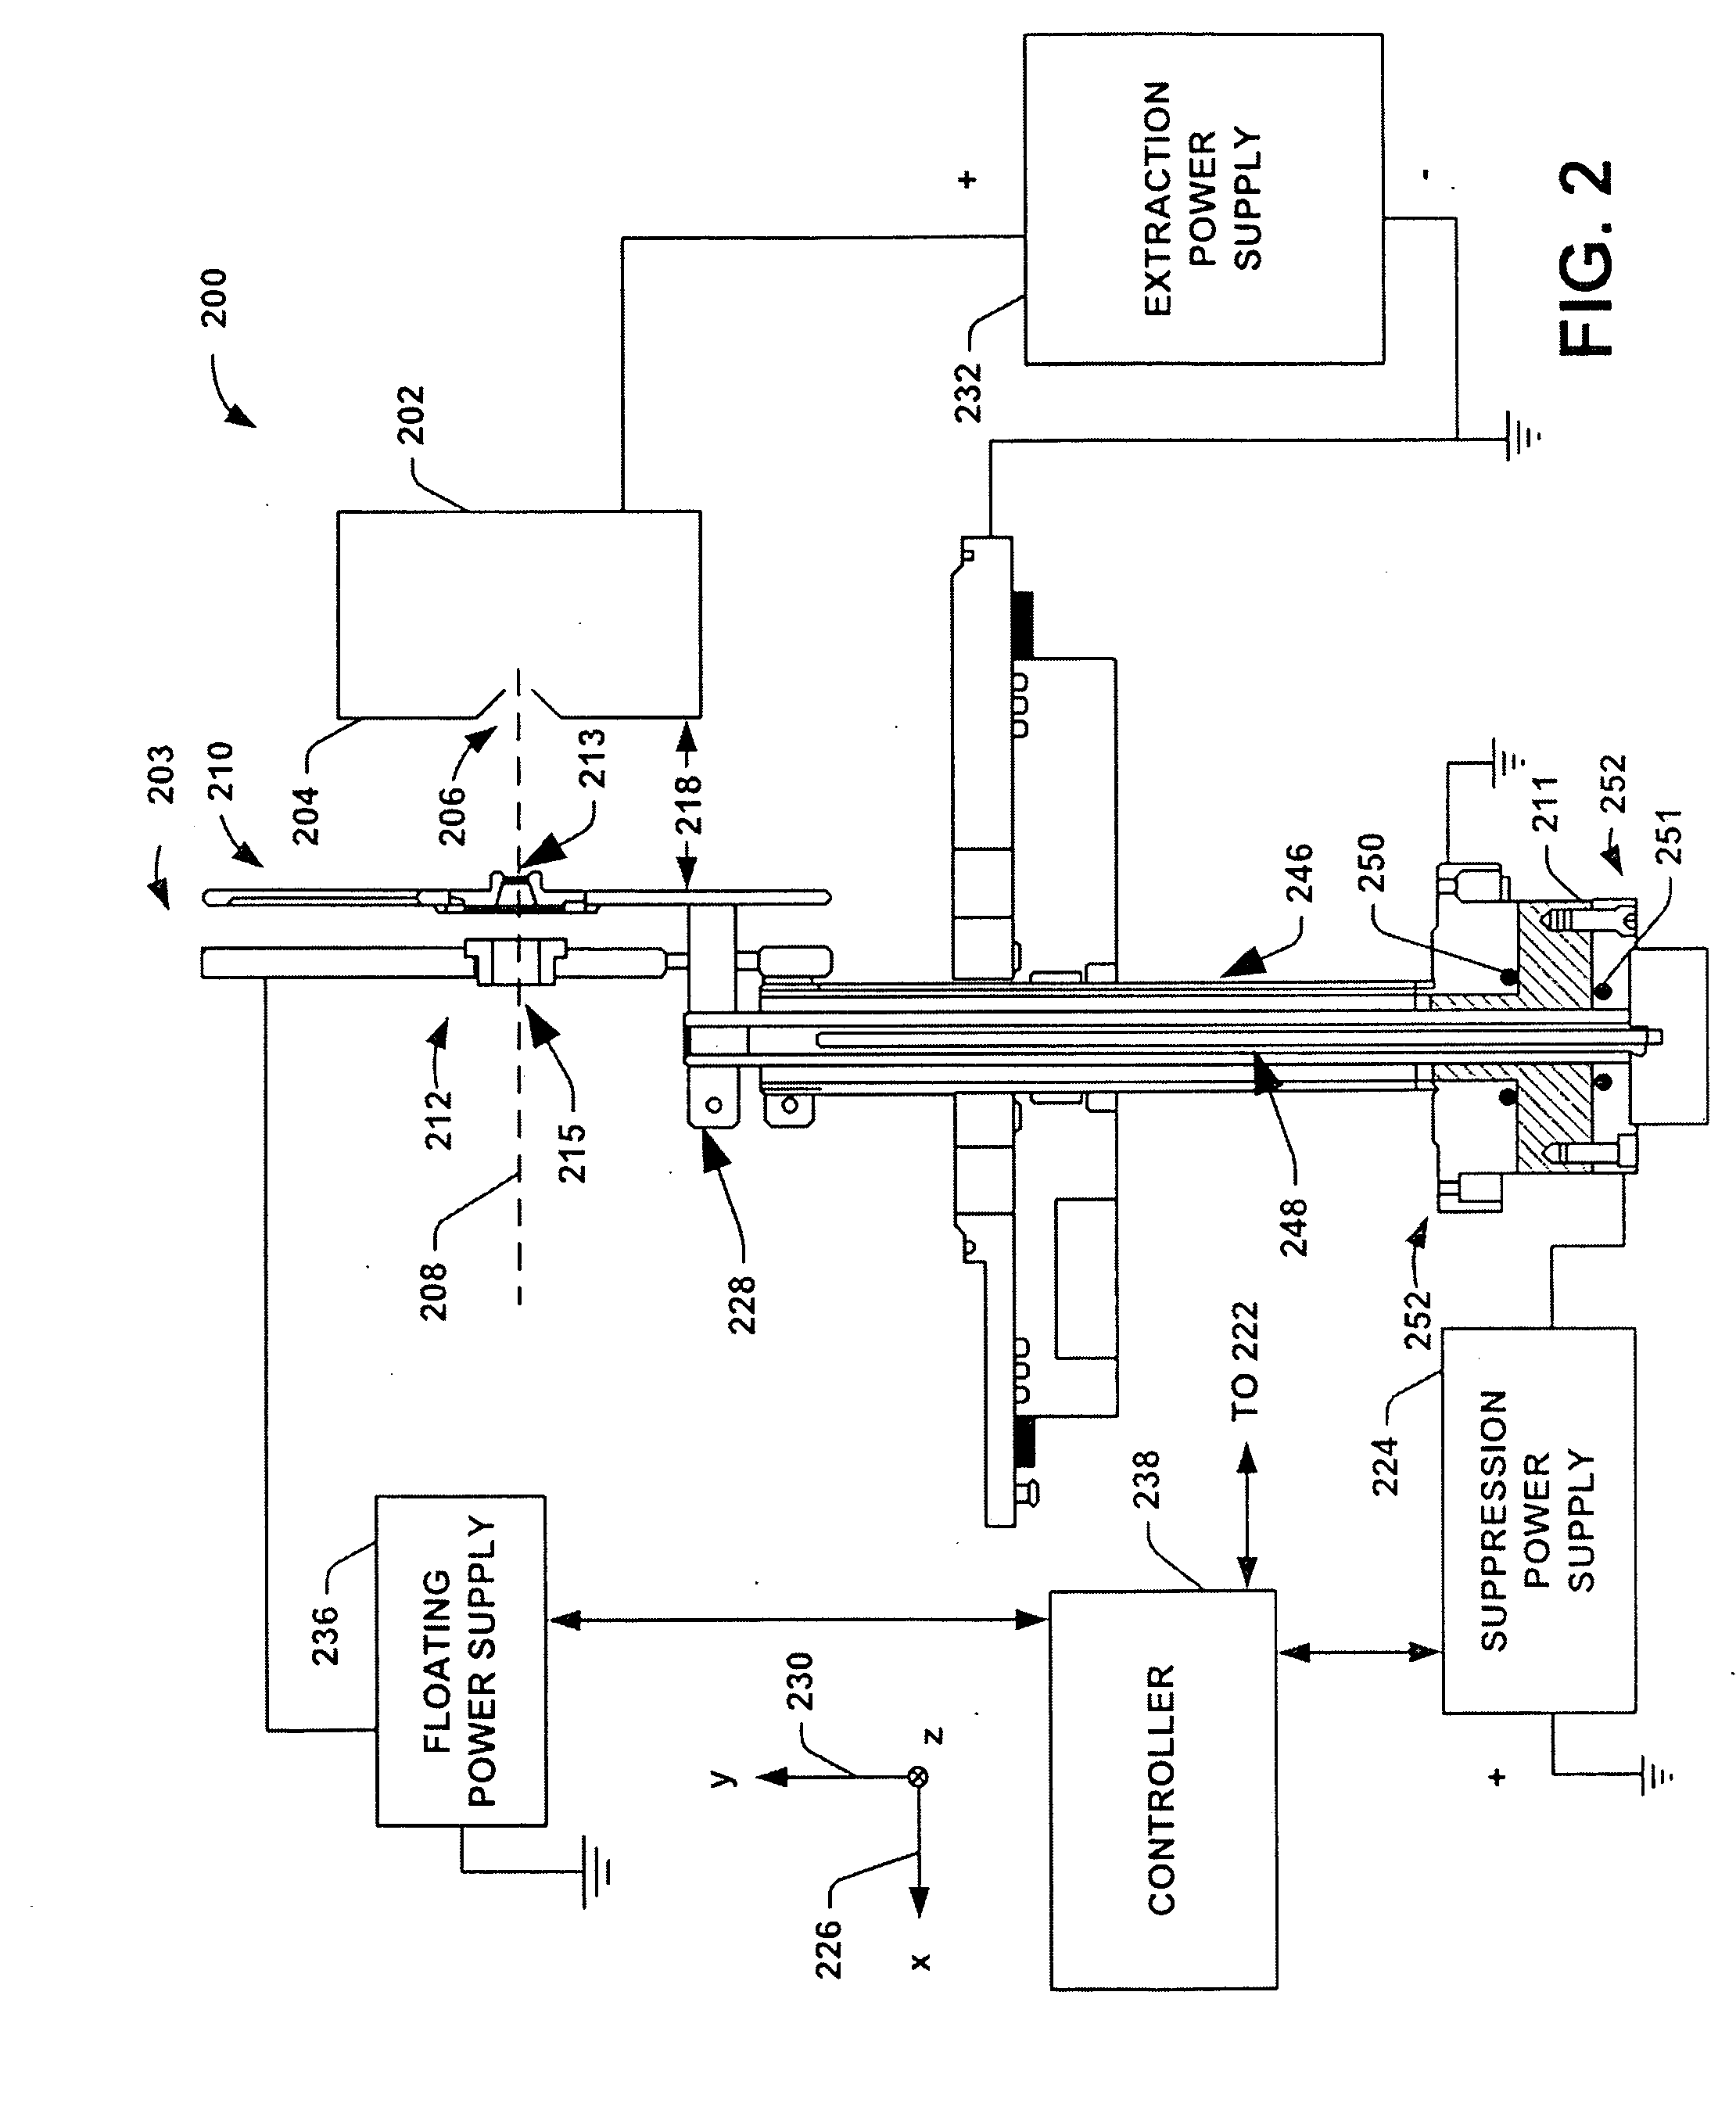 Extraction electrode manipulator